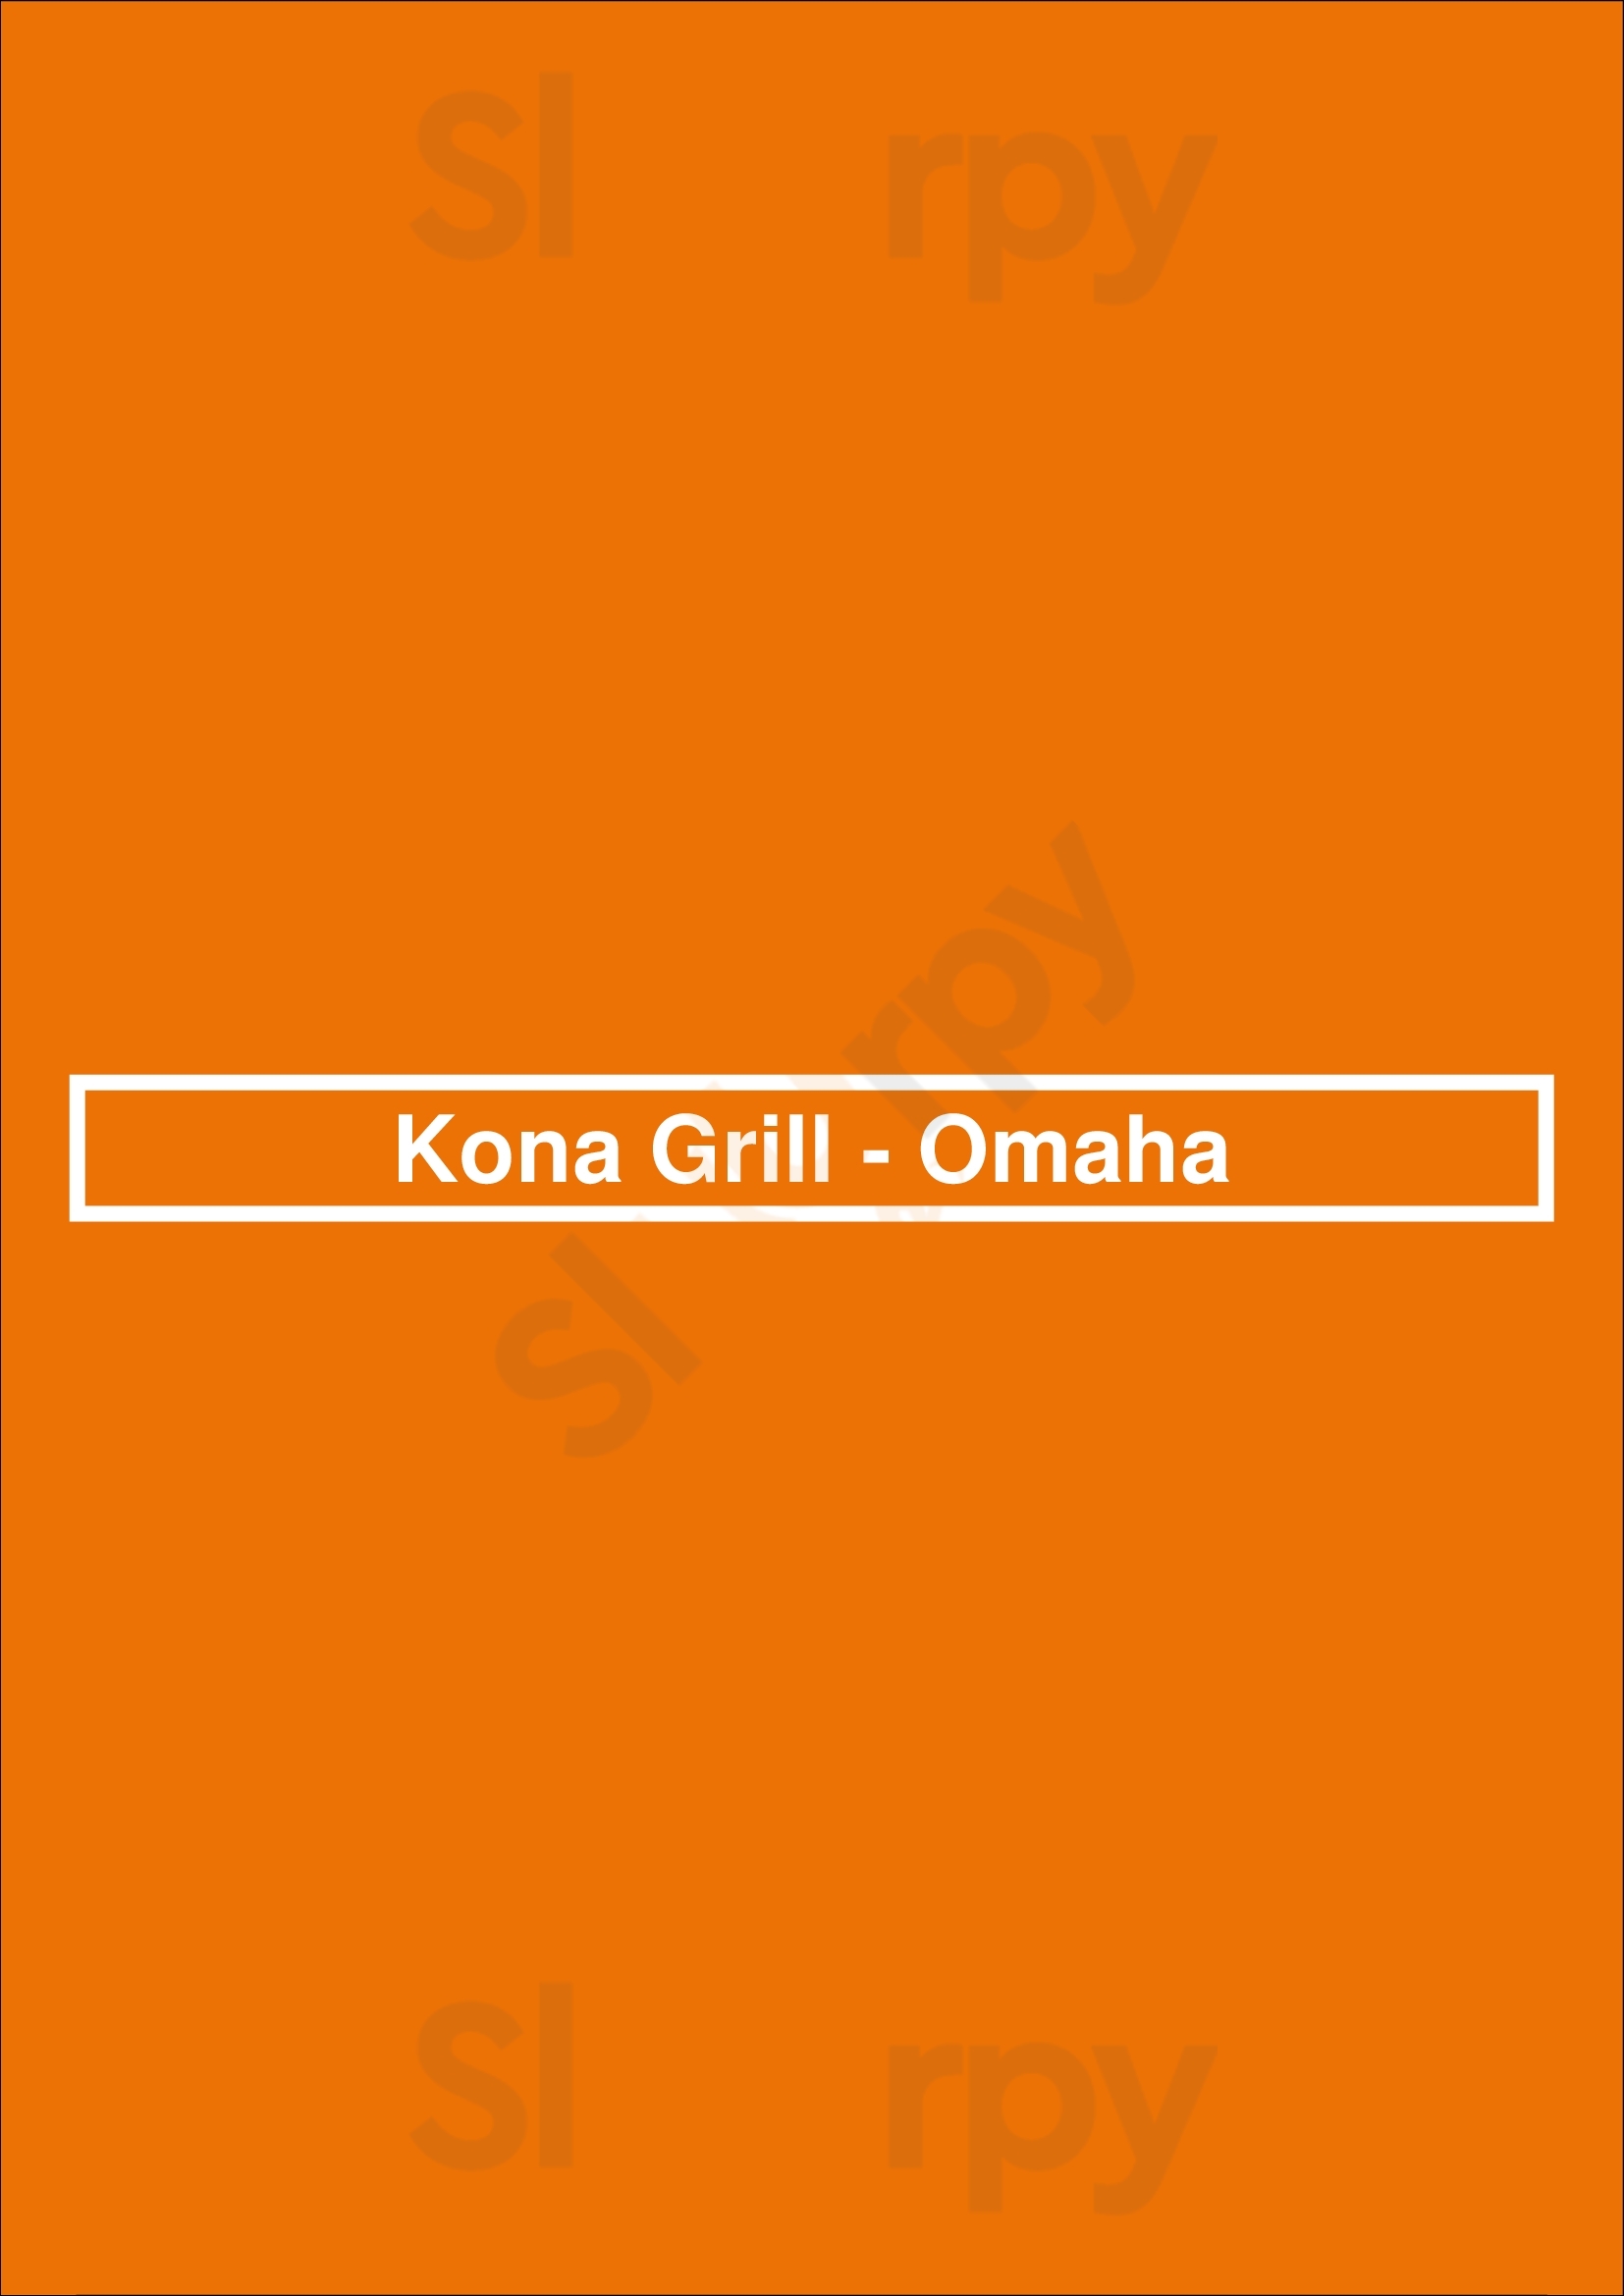 Kona Grill Omaha Menu - 1